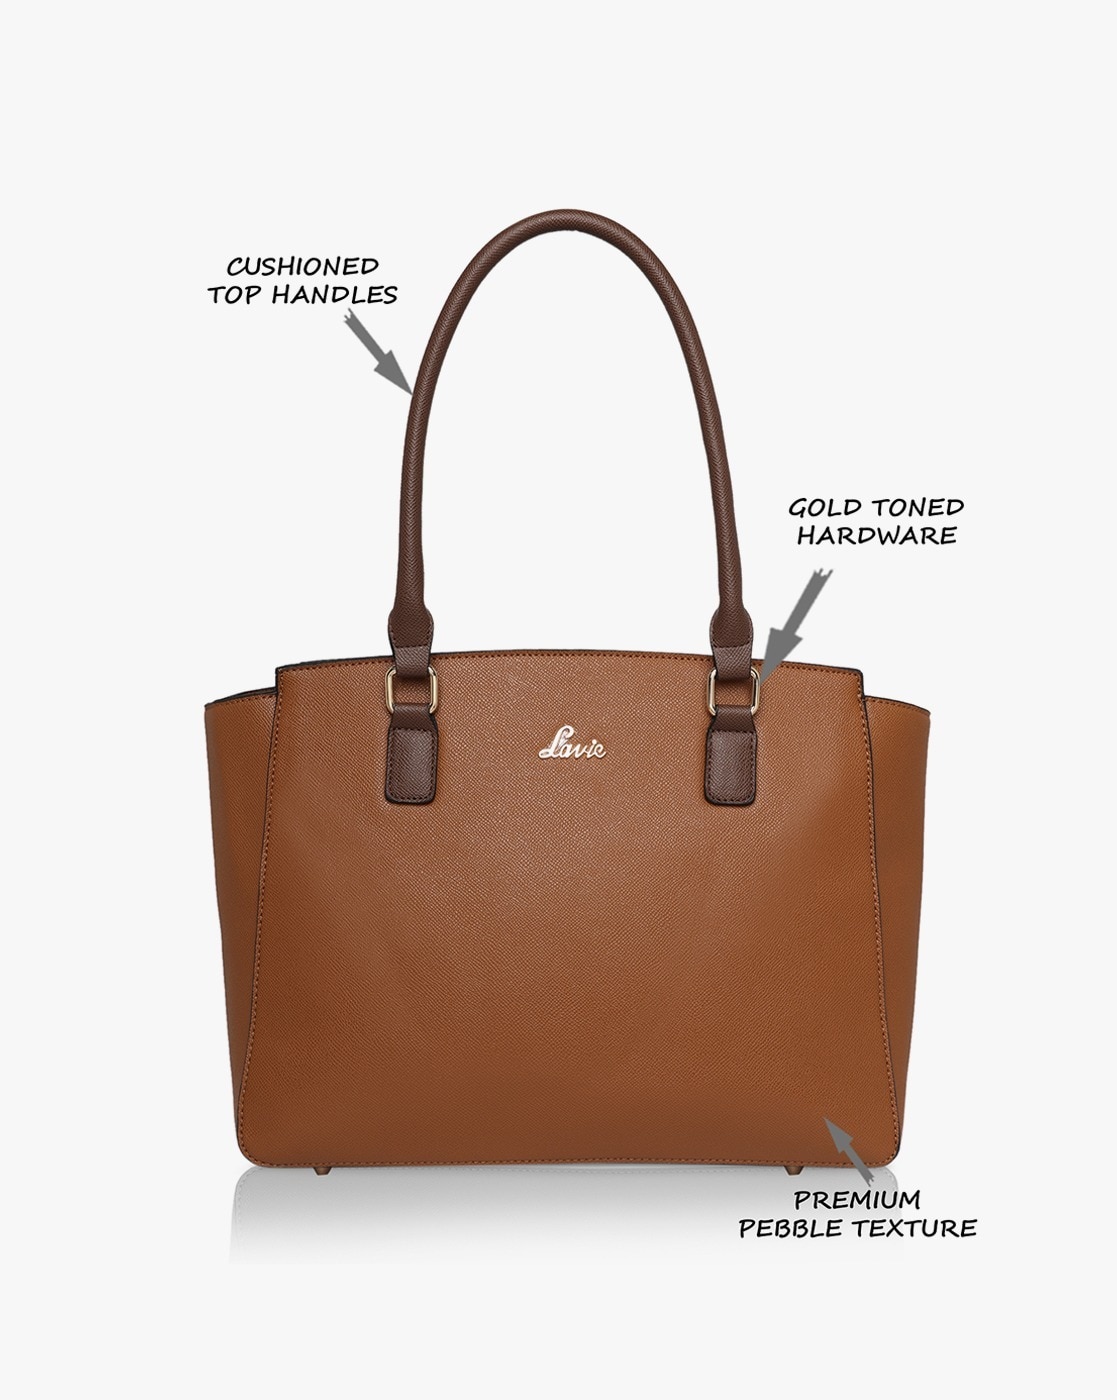 Myntra handbag haul | lino perros bridal handbag | trending bag collection  | slingbag | quilted bag - YouTube